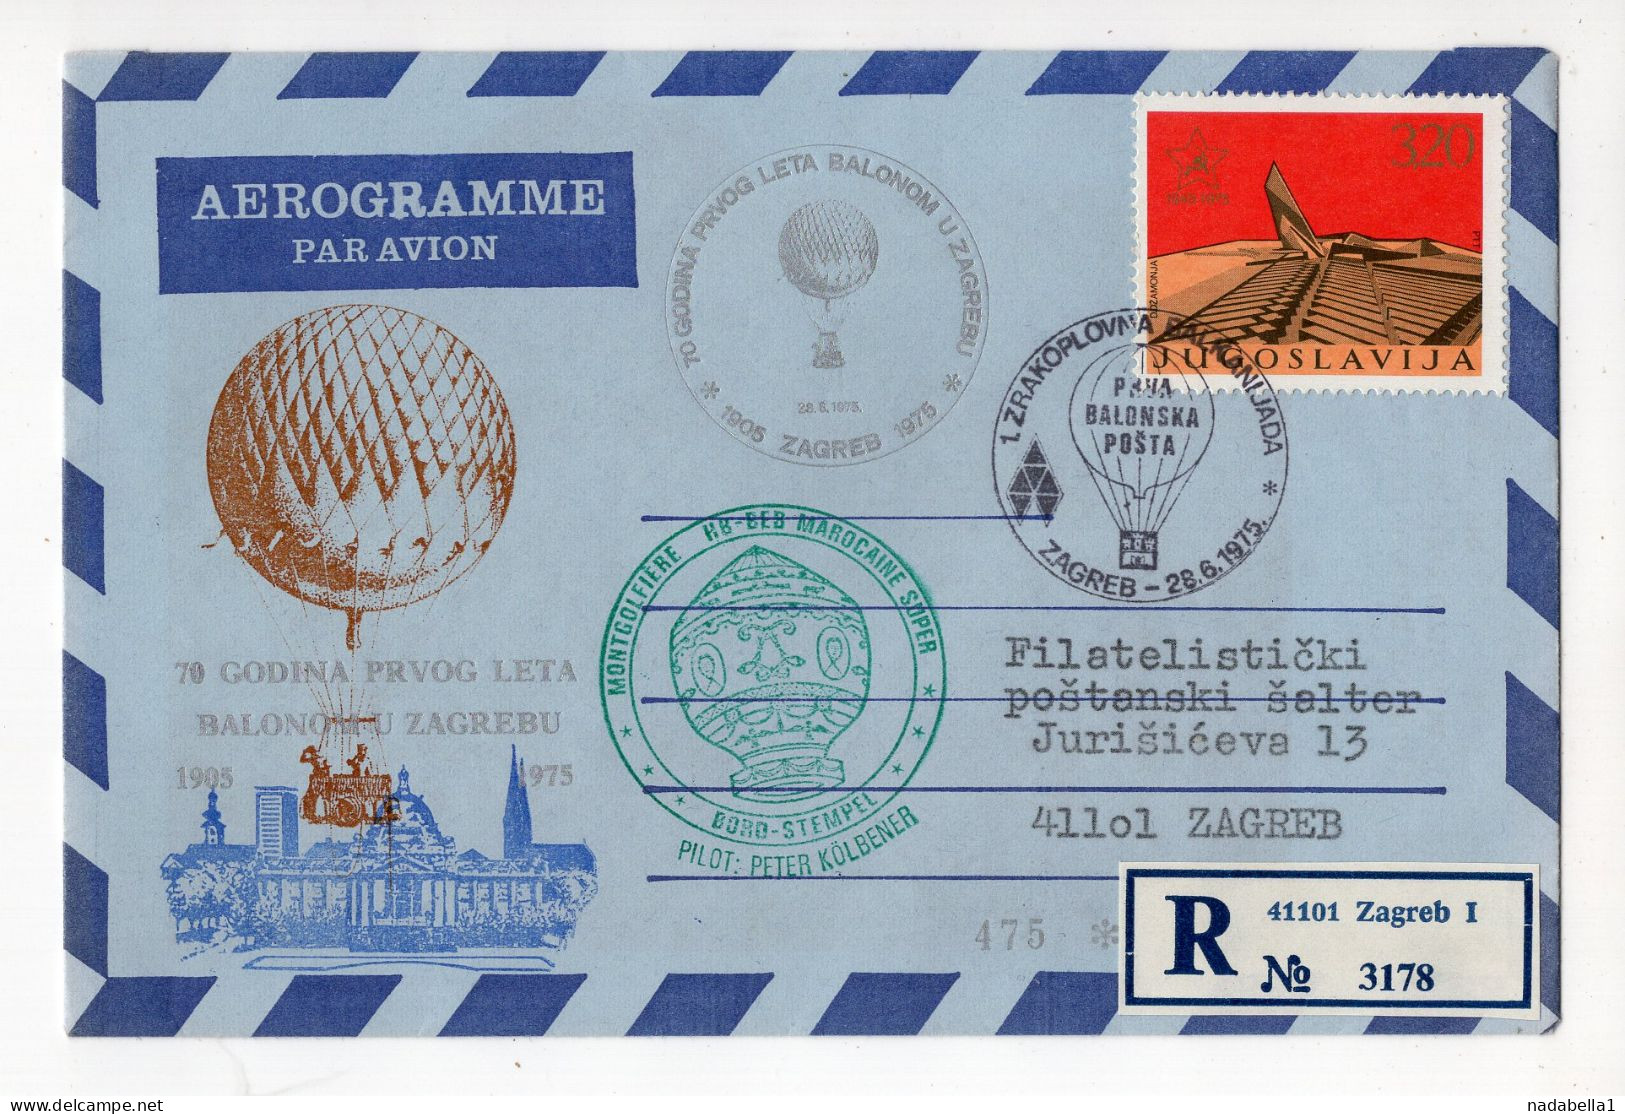 1975. YUGOSLAVIA,CROATIA,ZAGREB,AEROGRAM,AIRMAIL,BALLON POST 70th ANNIVERSARY - Luftpost